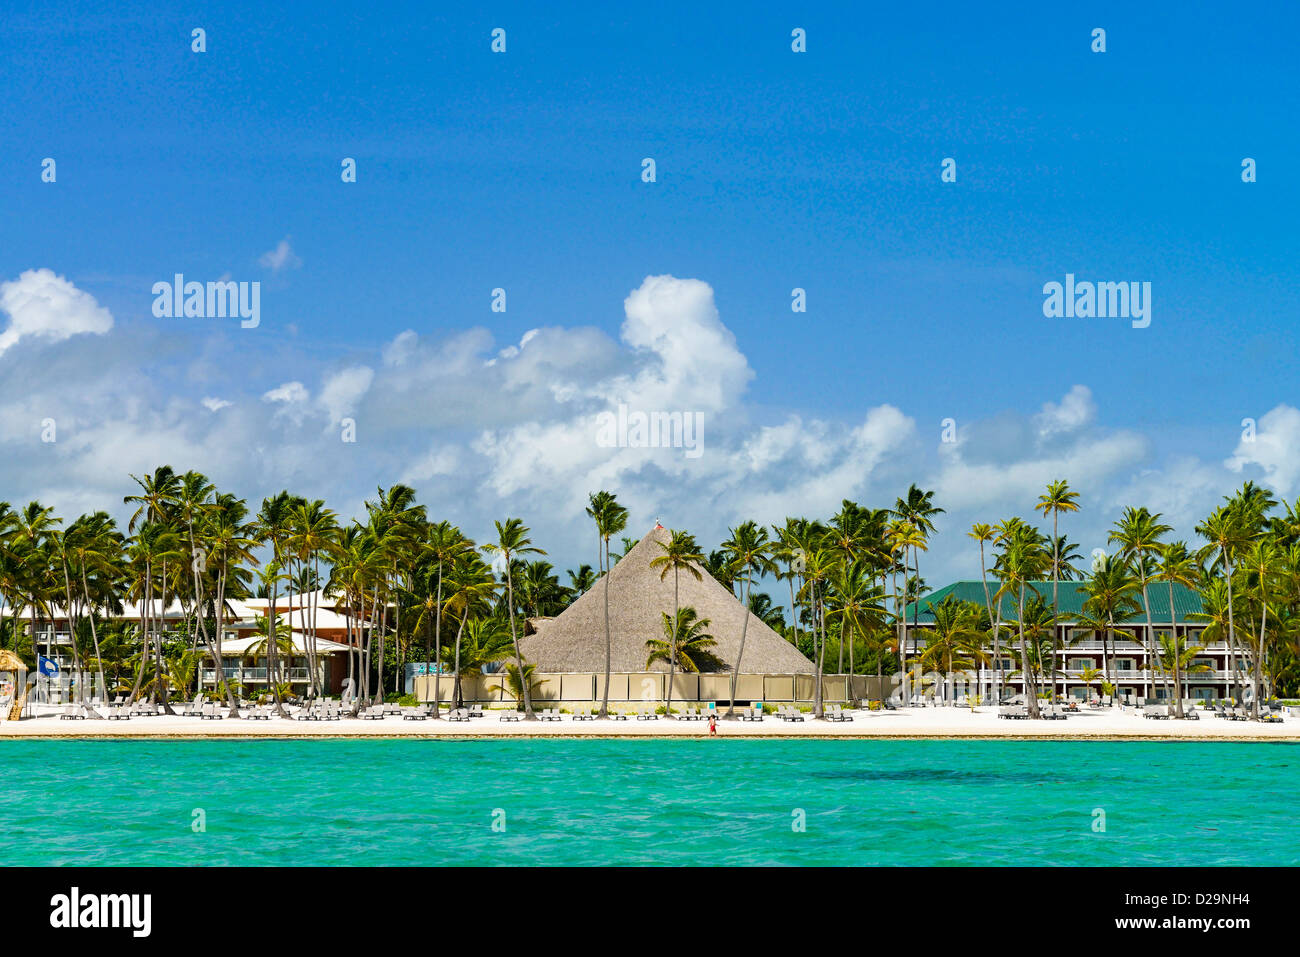 Hotels and circular beach bar along the beach at Punta Cana, Dominican Republic Stock Photo